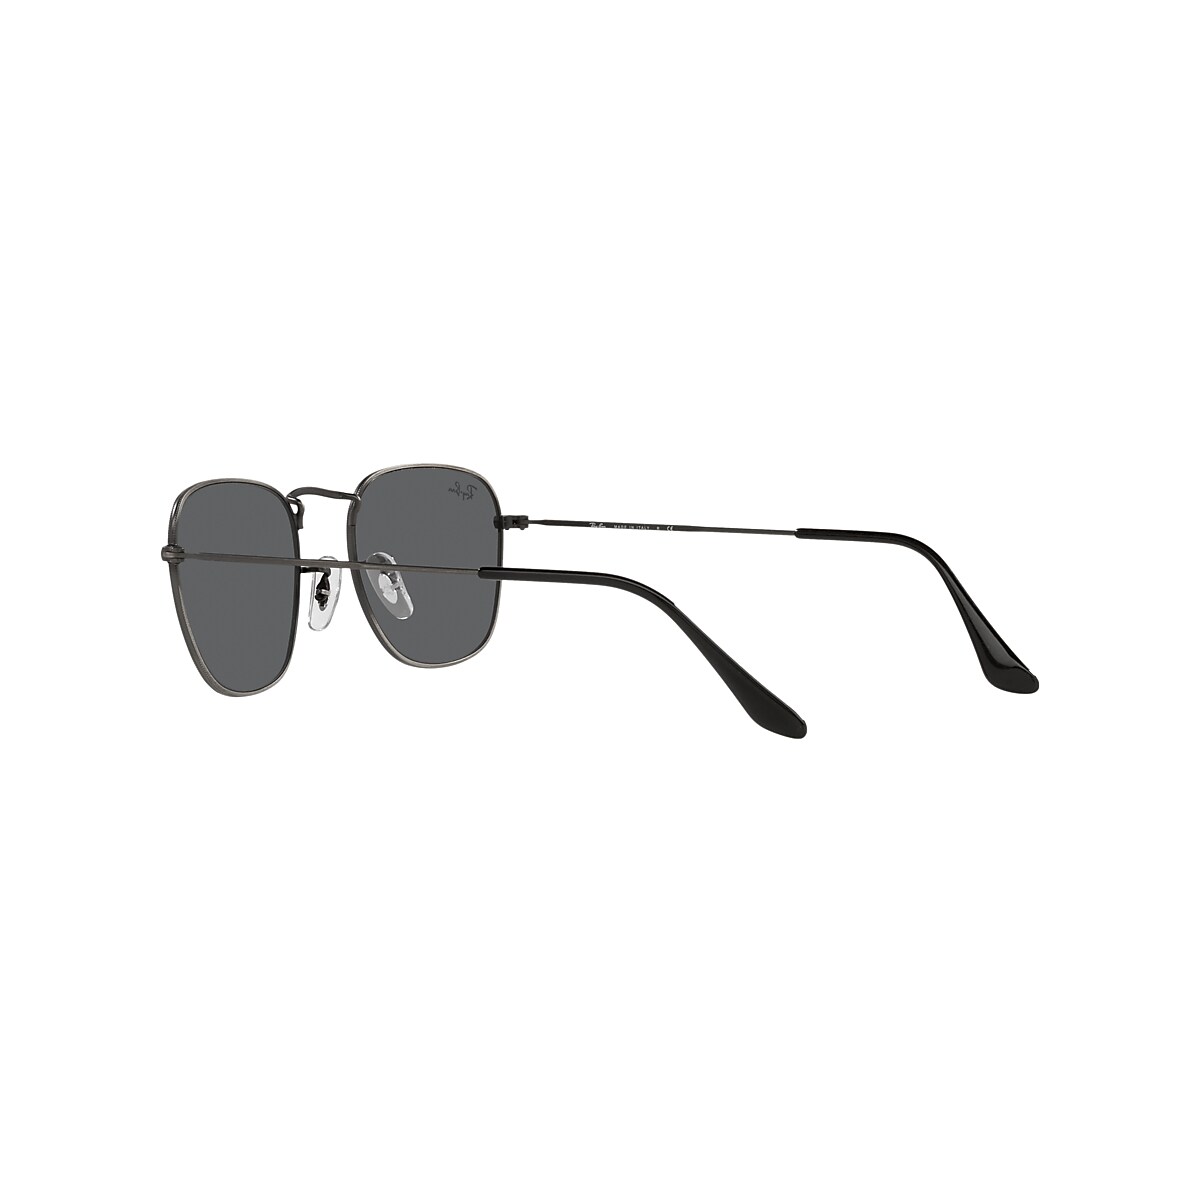 FRANK ANTIQUED Sunglasses in Gunmetal and Dark Grey - Ray-Ban